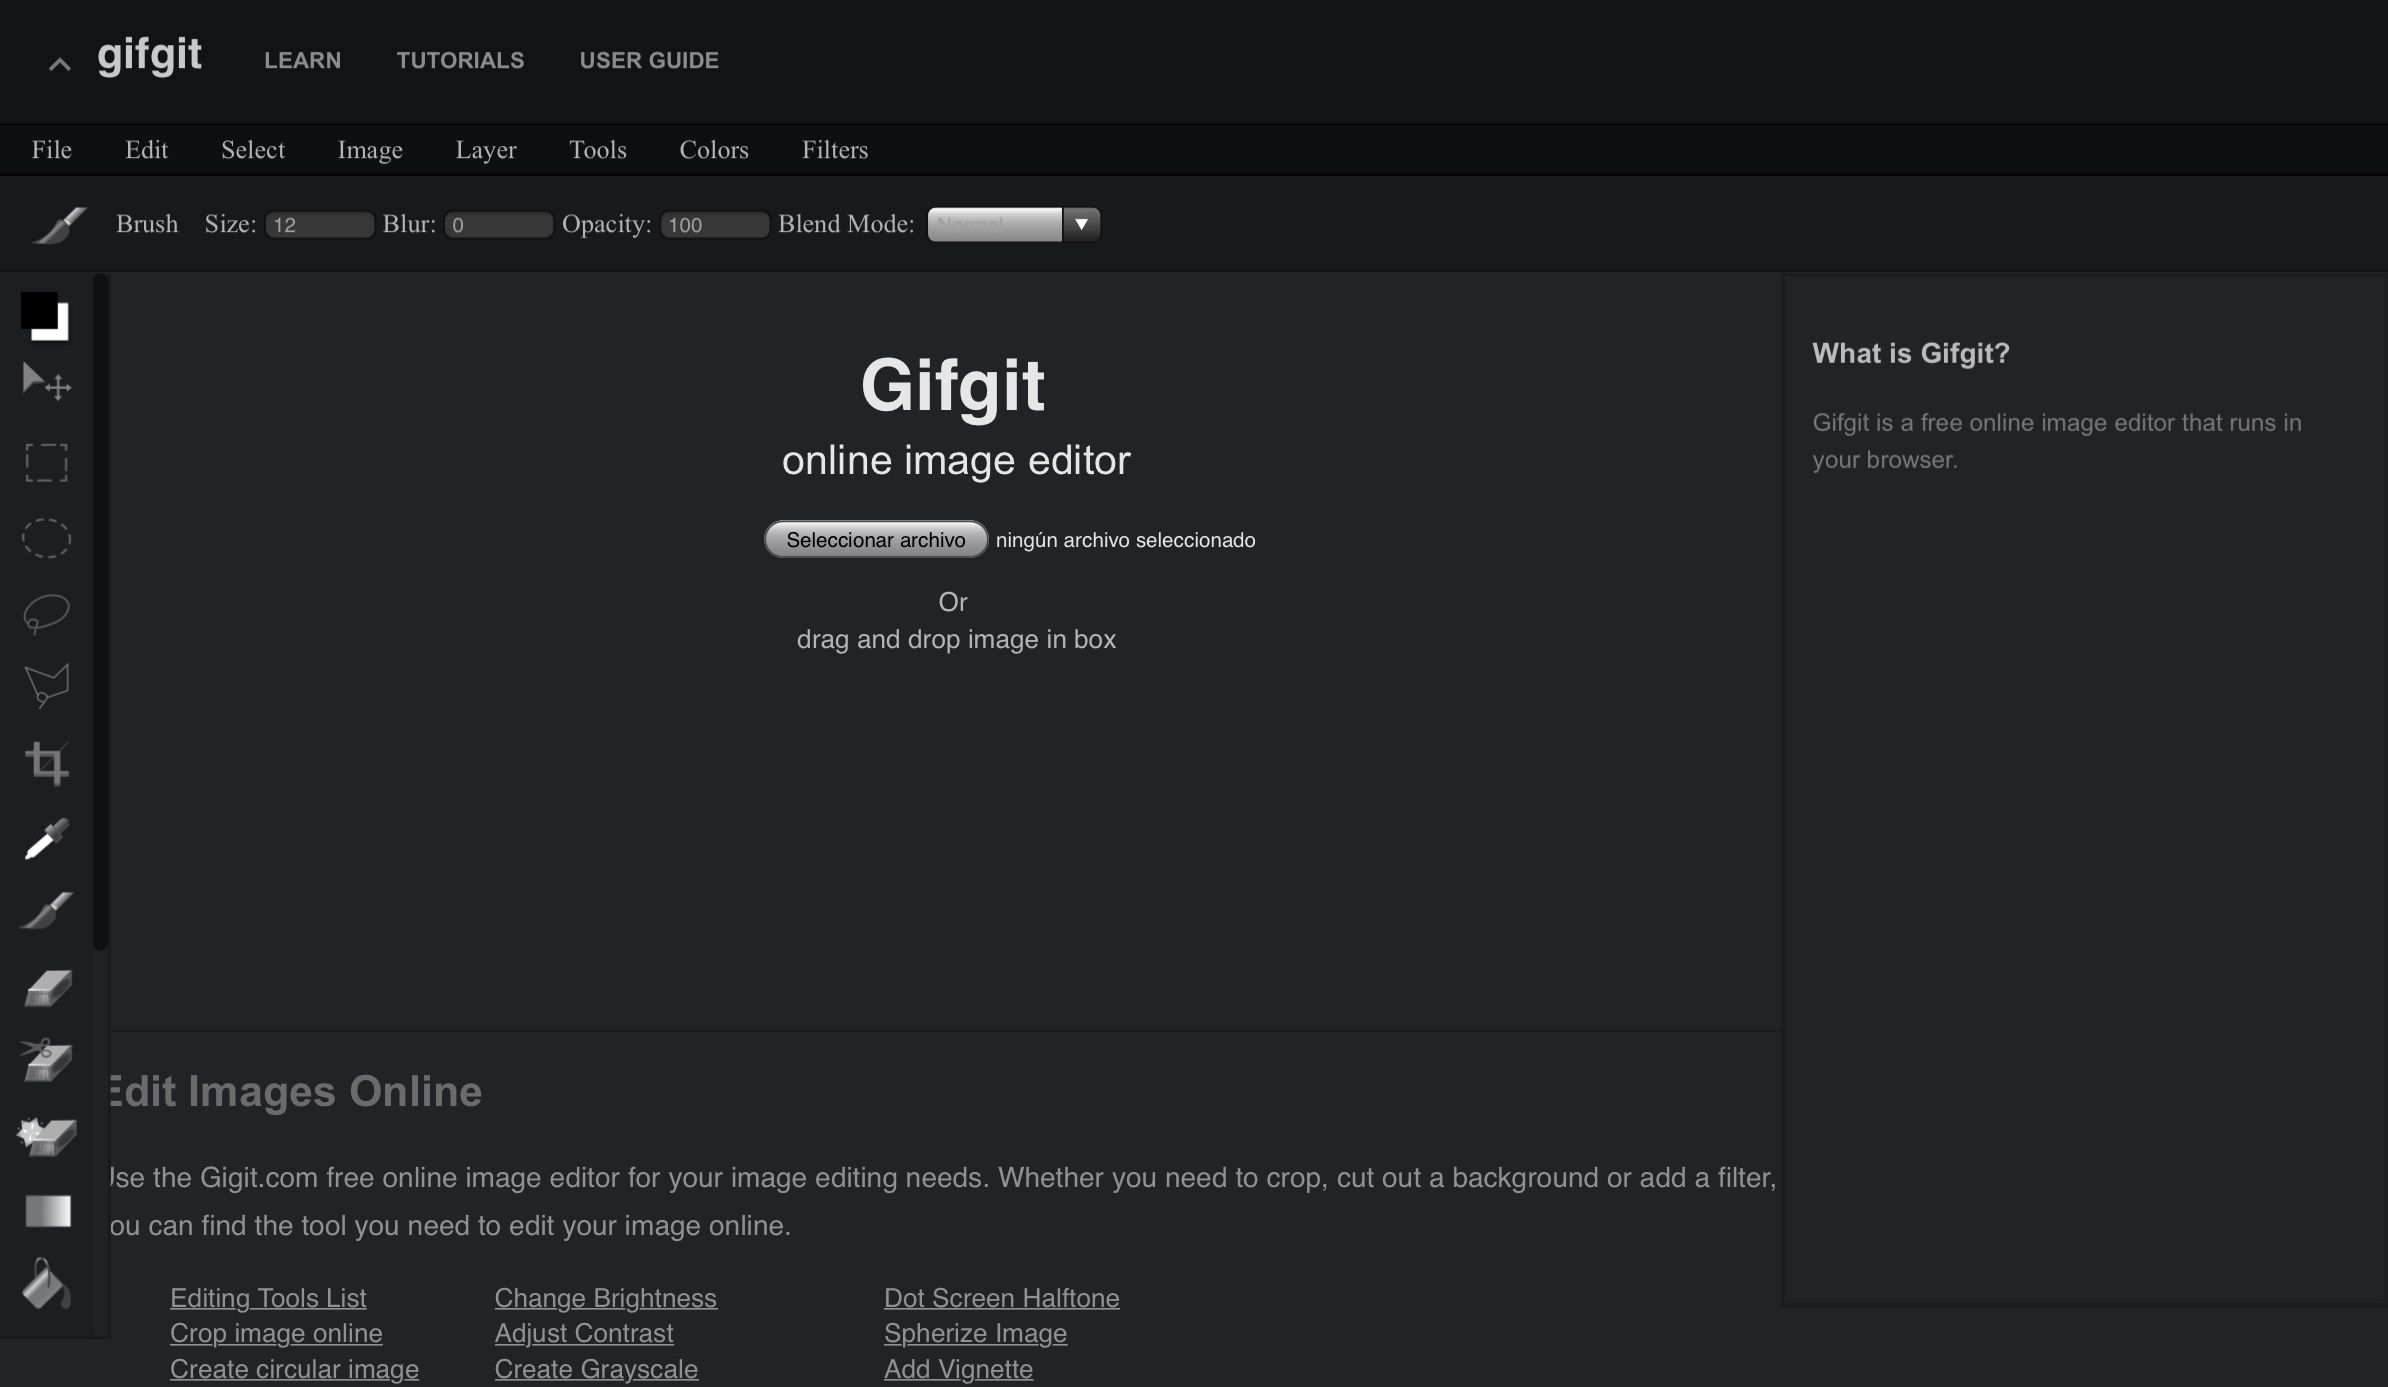 Gifgit - Free Online Image Editor